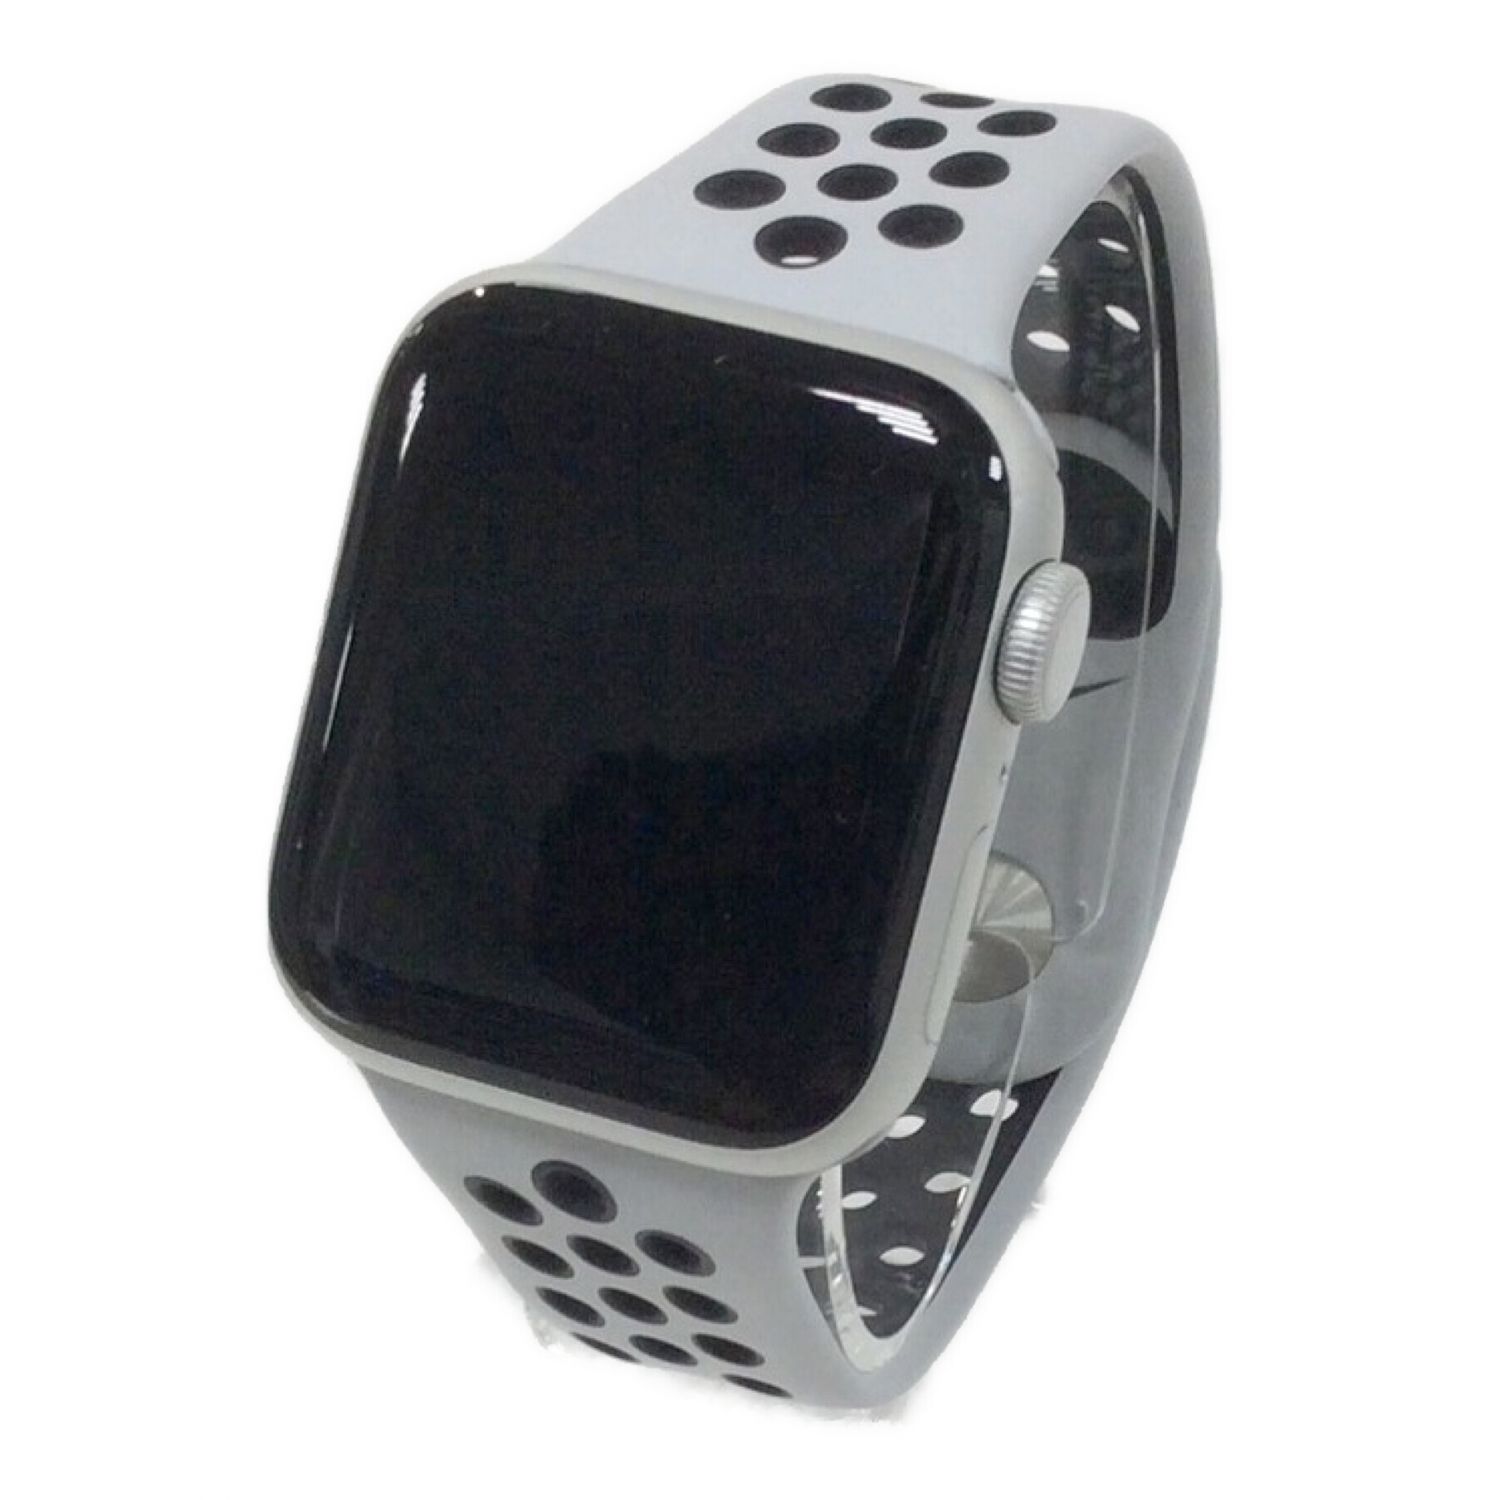 Apple×NIKE (アップル ナイキ) Apple Watch Series 6 GPS WR-50M 40MM